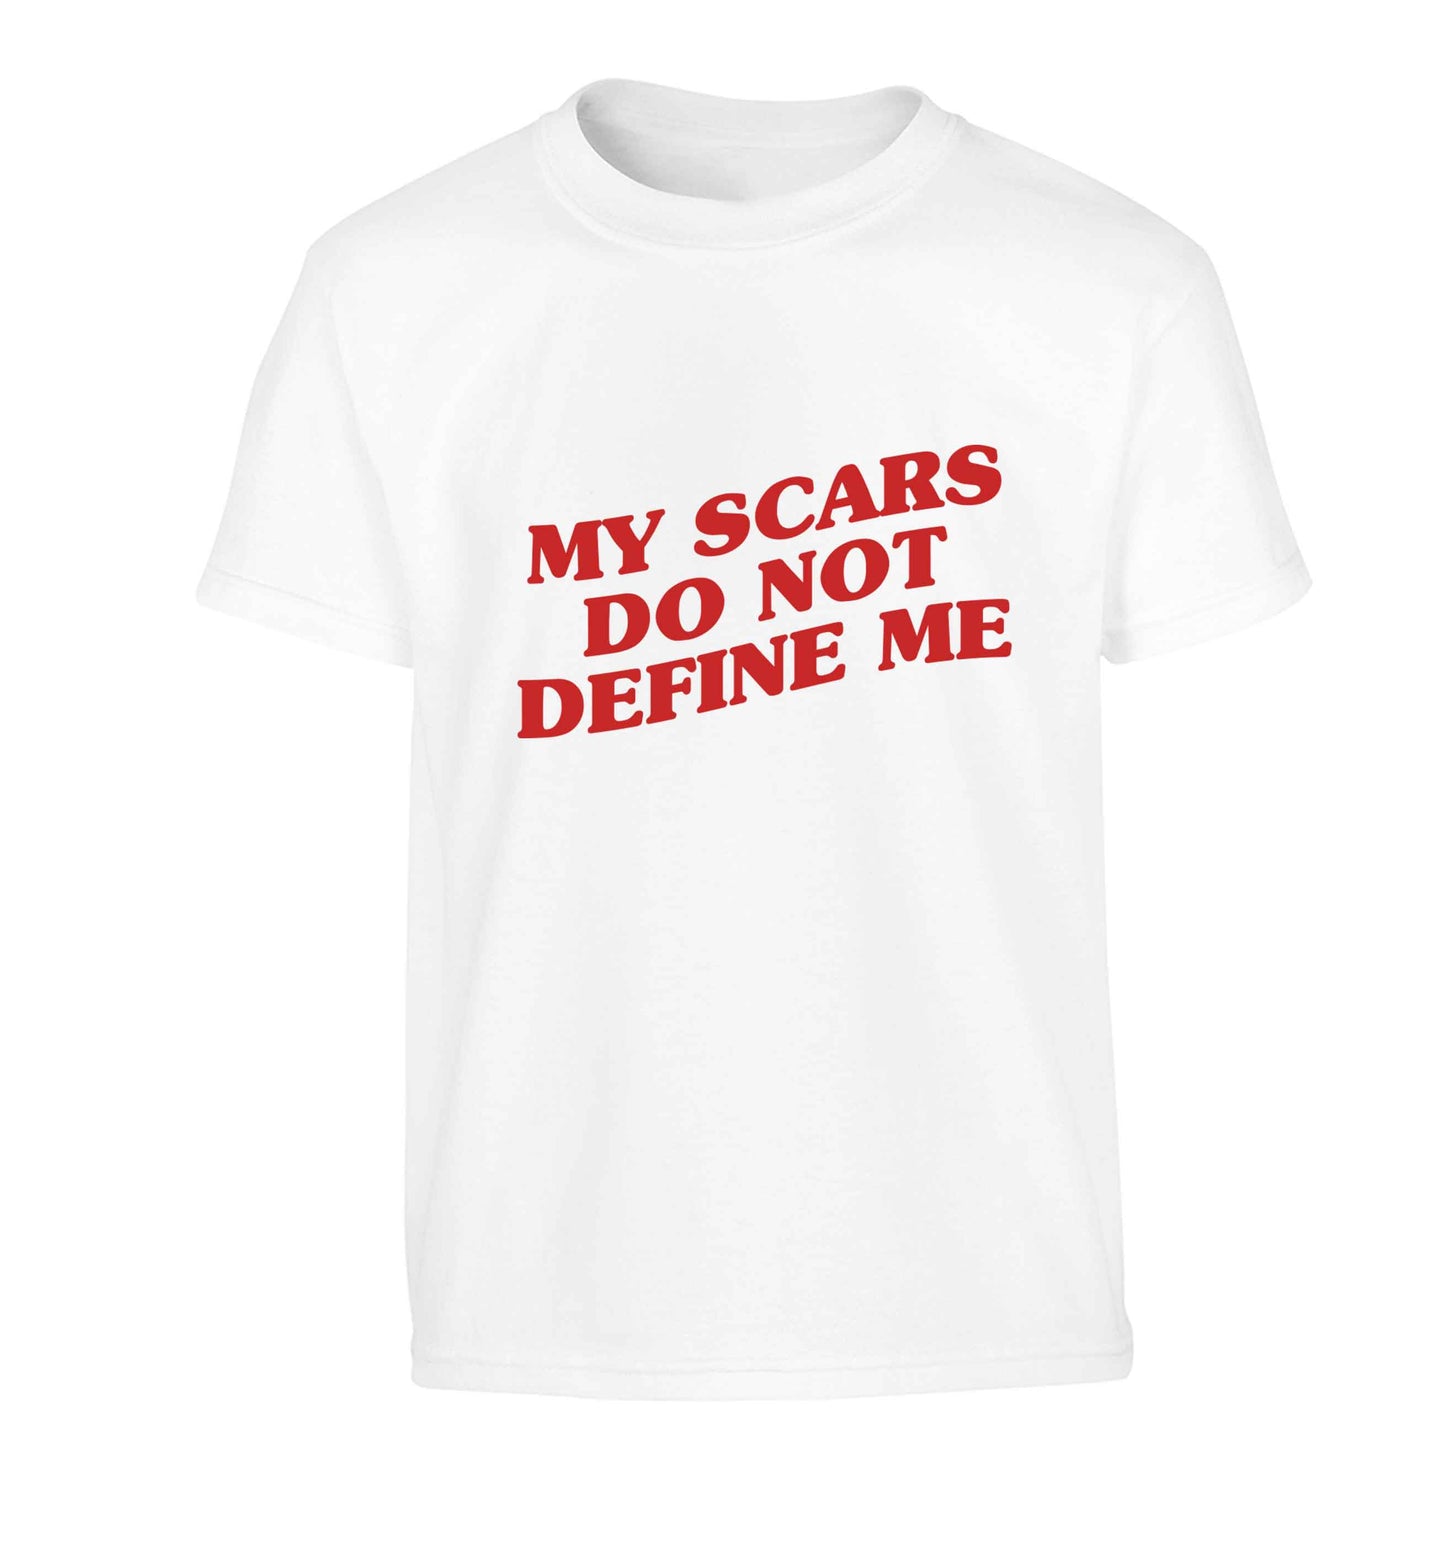 My scars do not define me Children's white Tshirt 12-13 Years